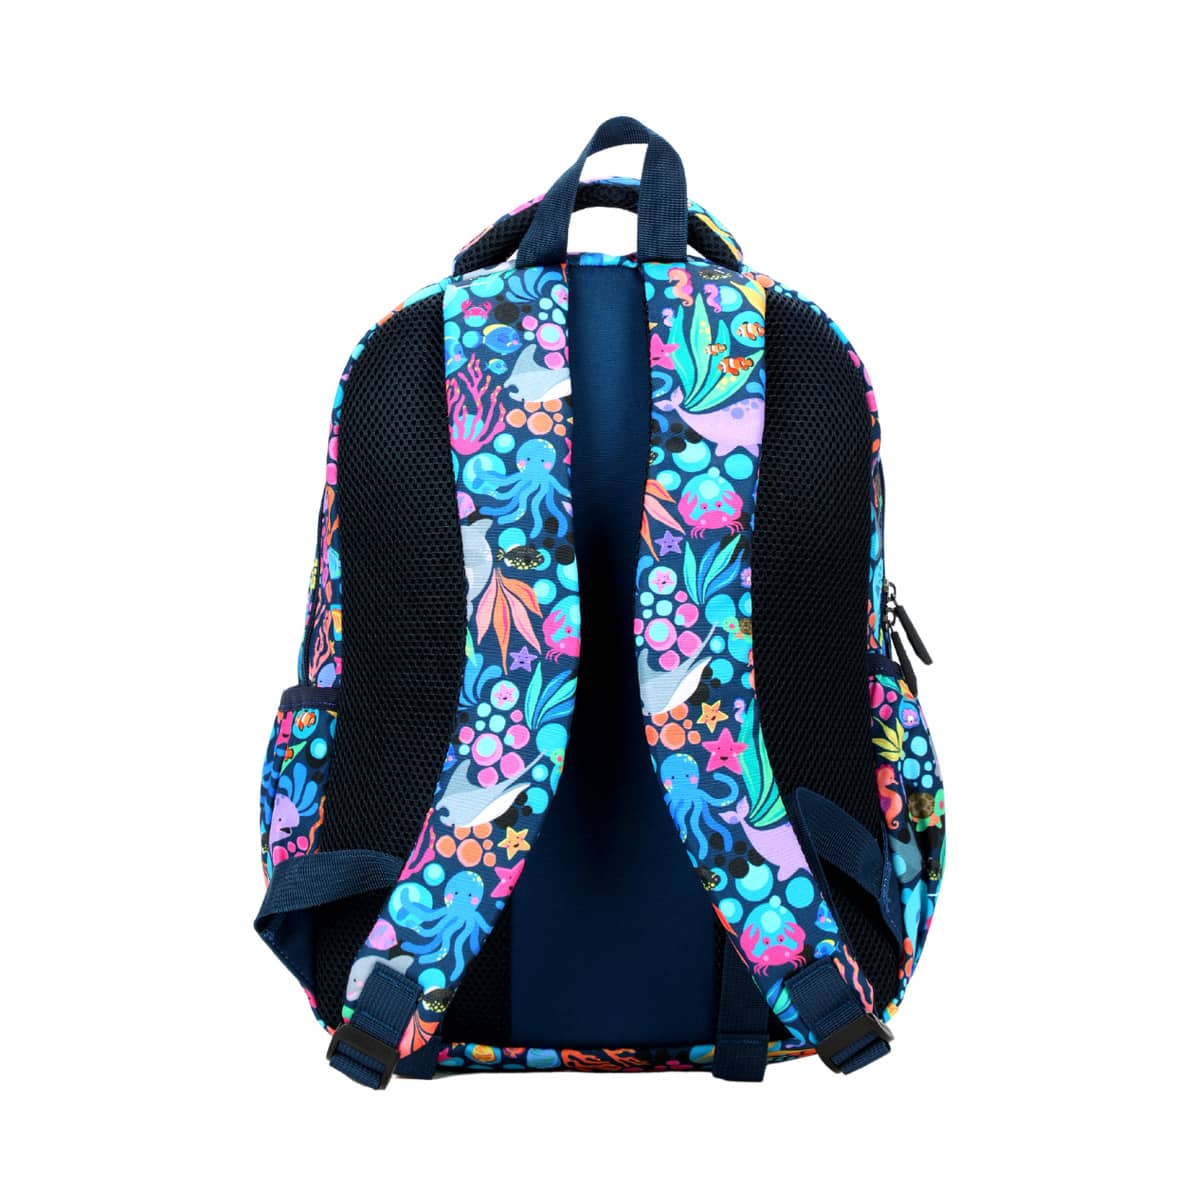 Alimasy Midsize Backpack - Kasey Rainbow - Sealife